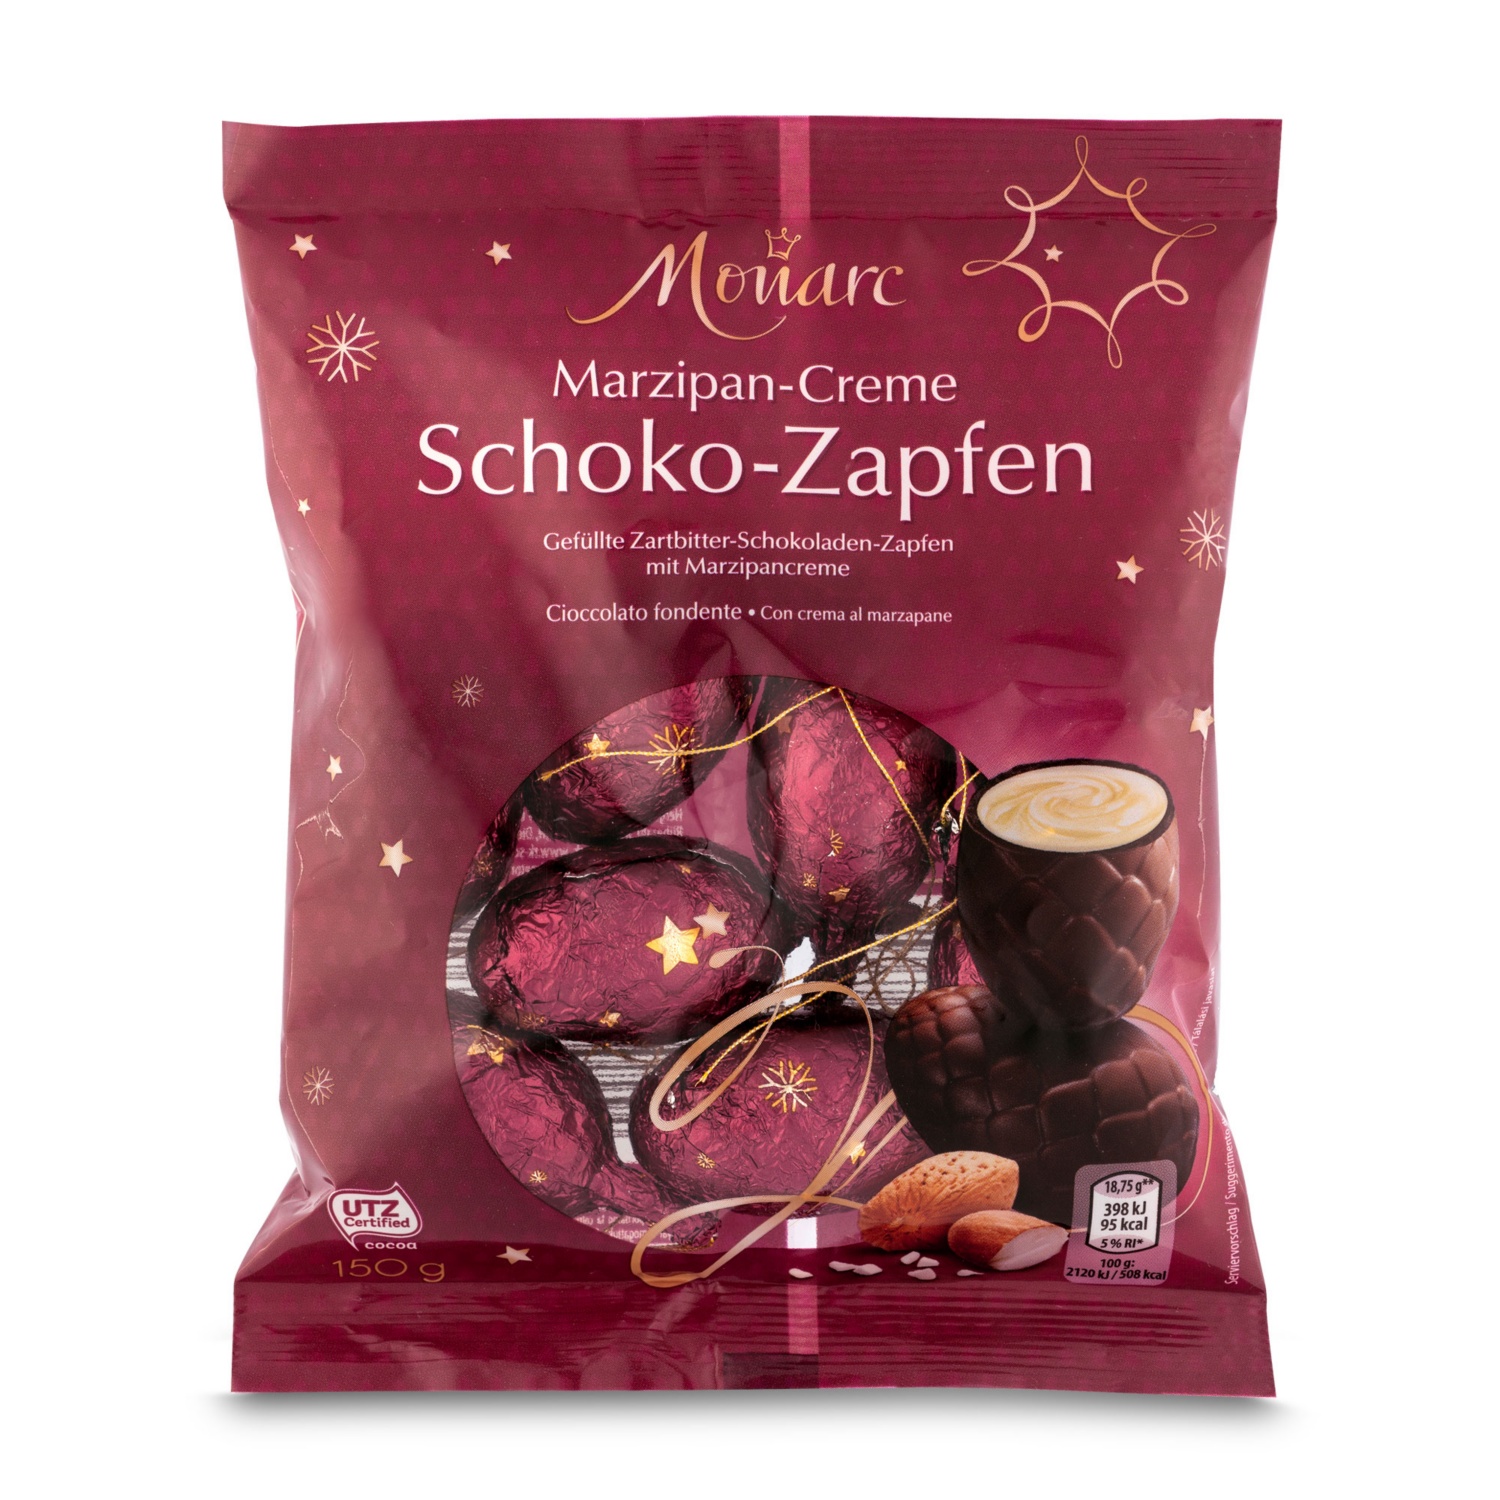 MONARC Schoko-Zapfen, Marzipan